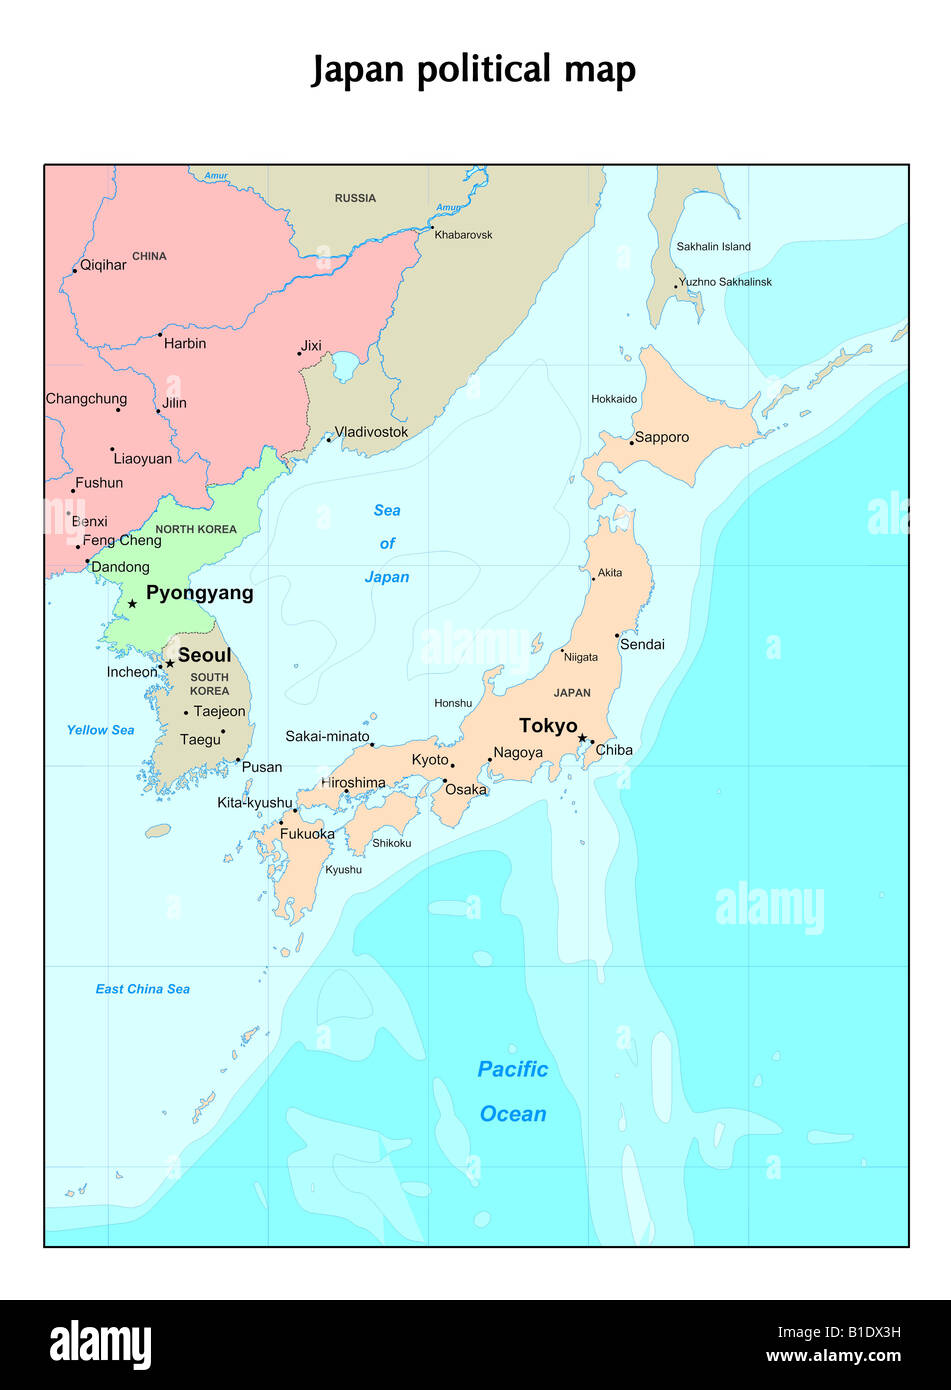 Japan political map Stock Photo